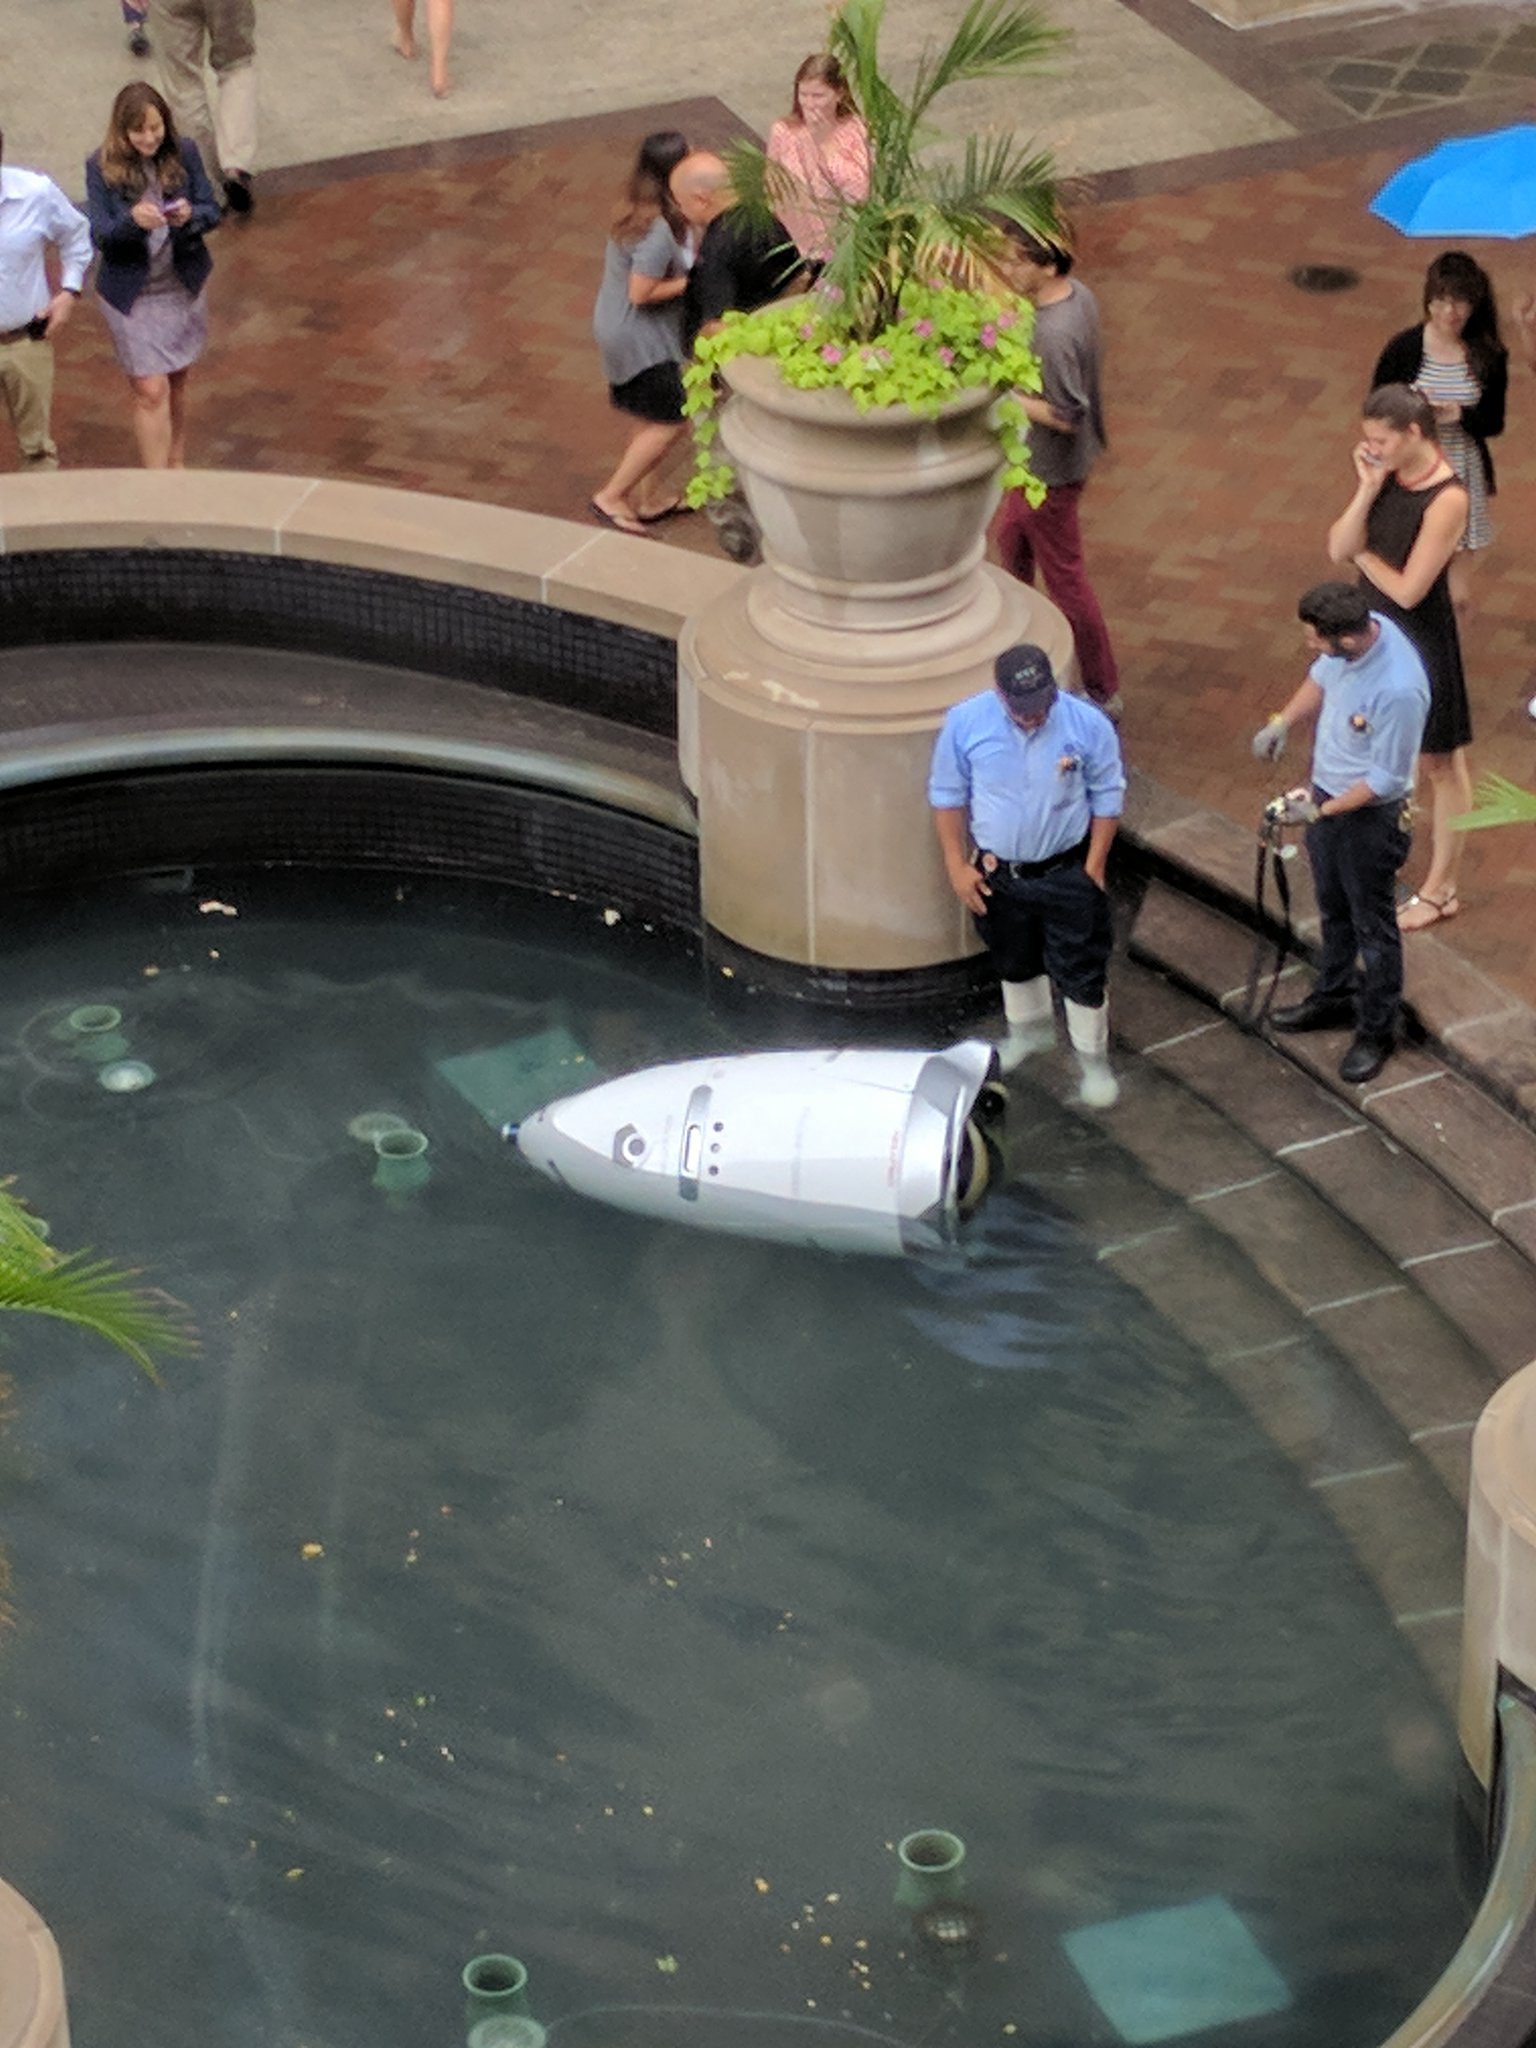 D.C. Office Building Security Robot Commits Suicide